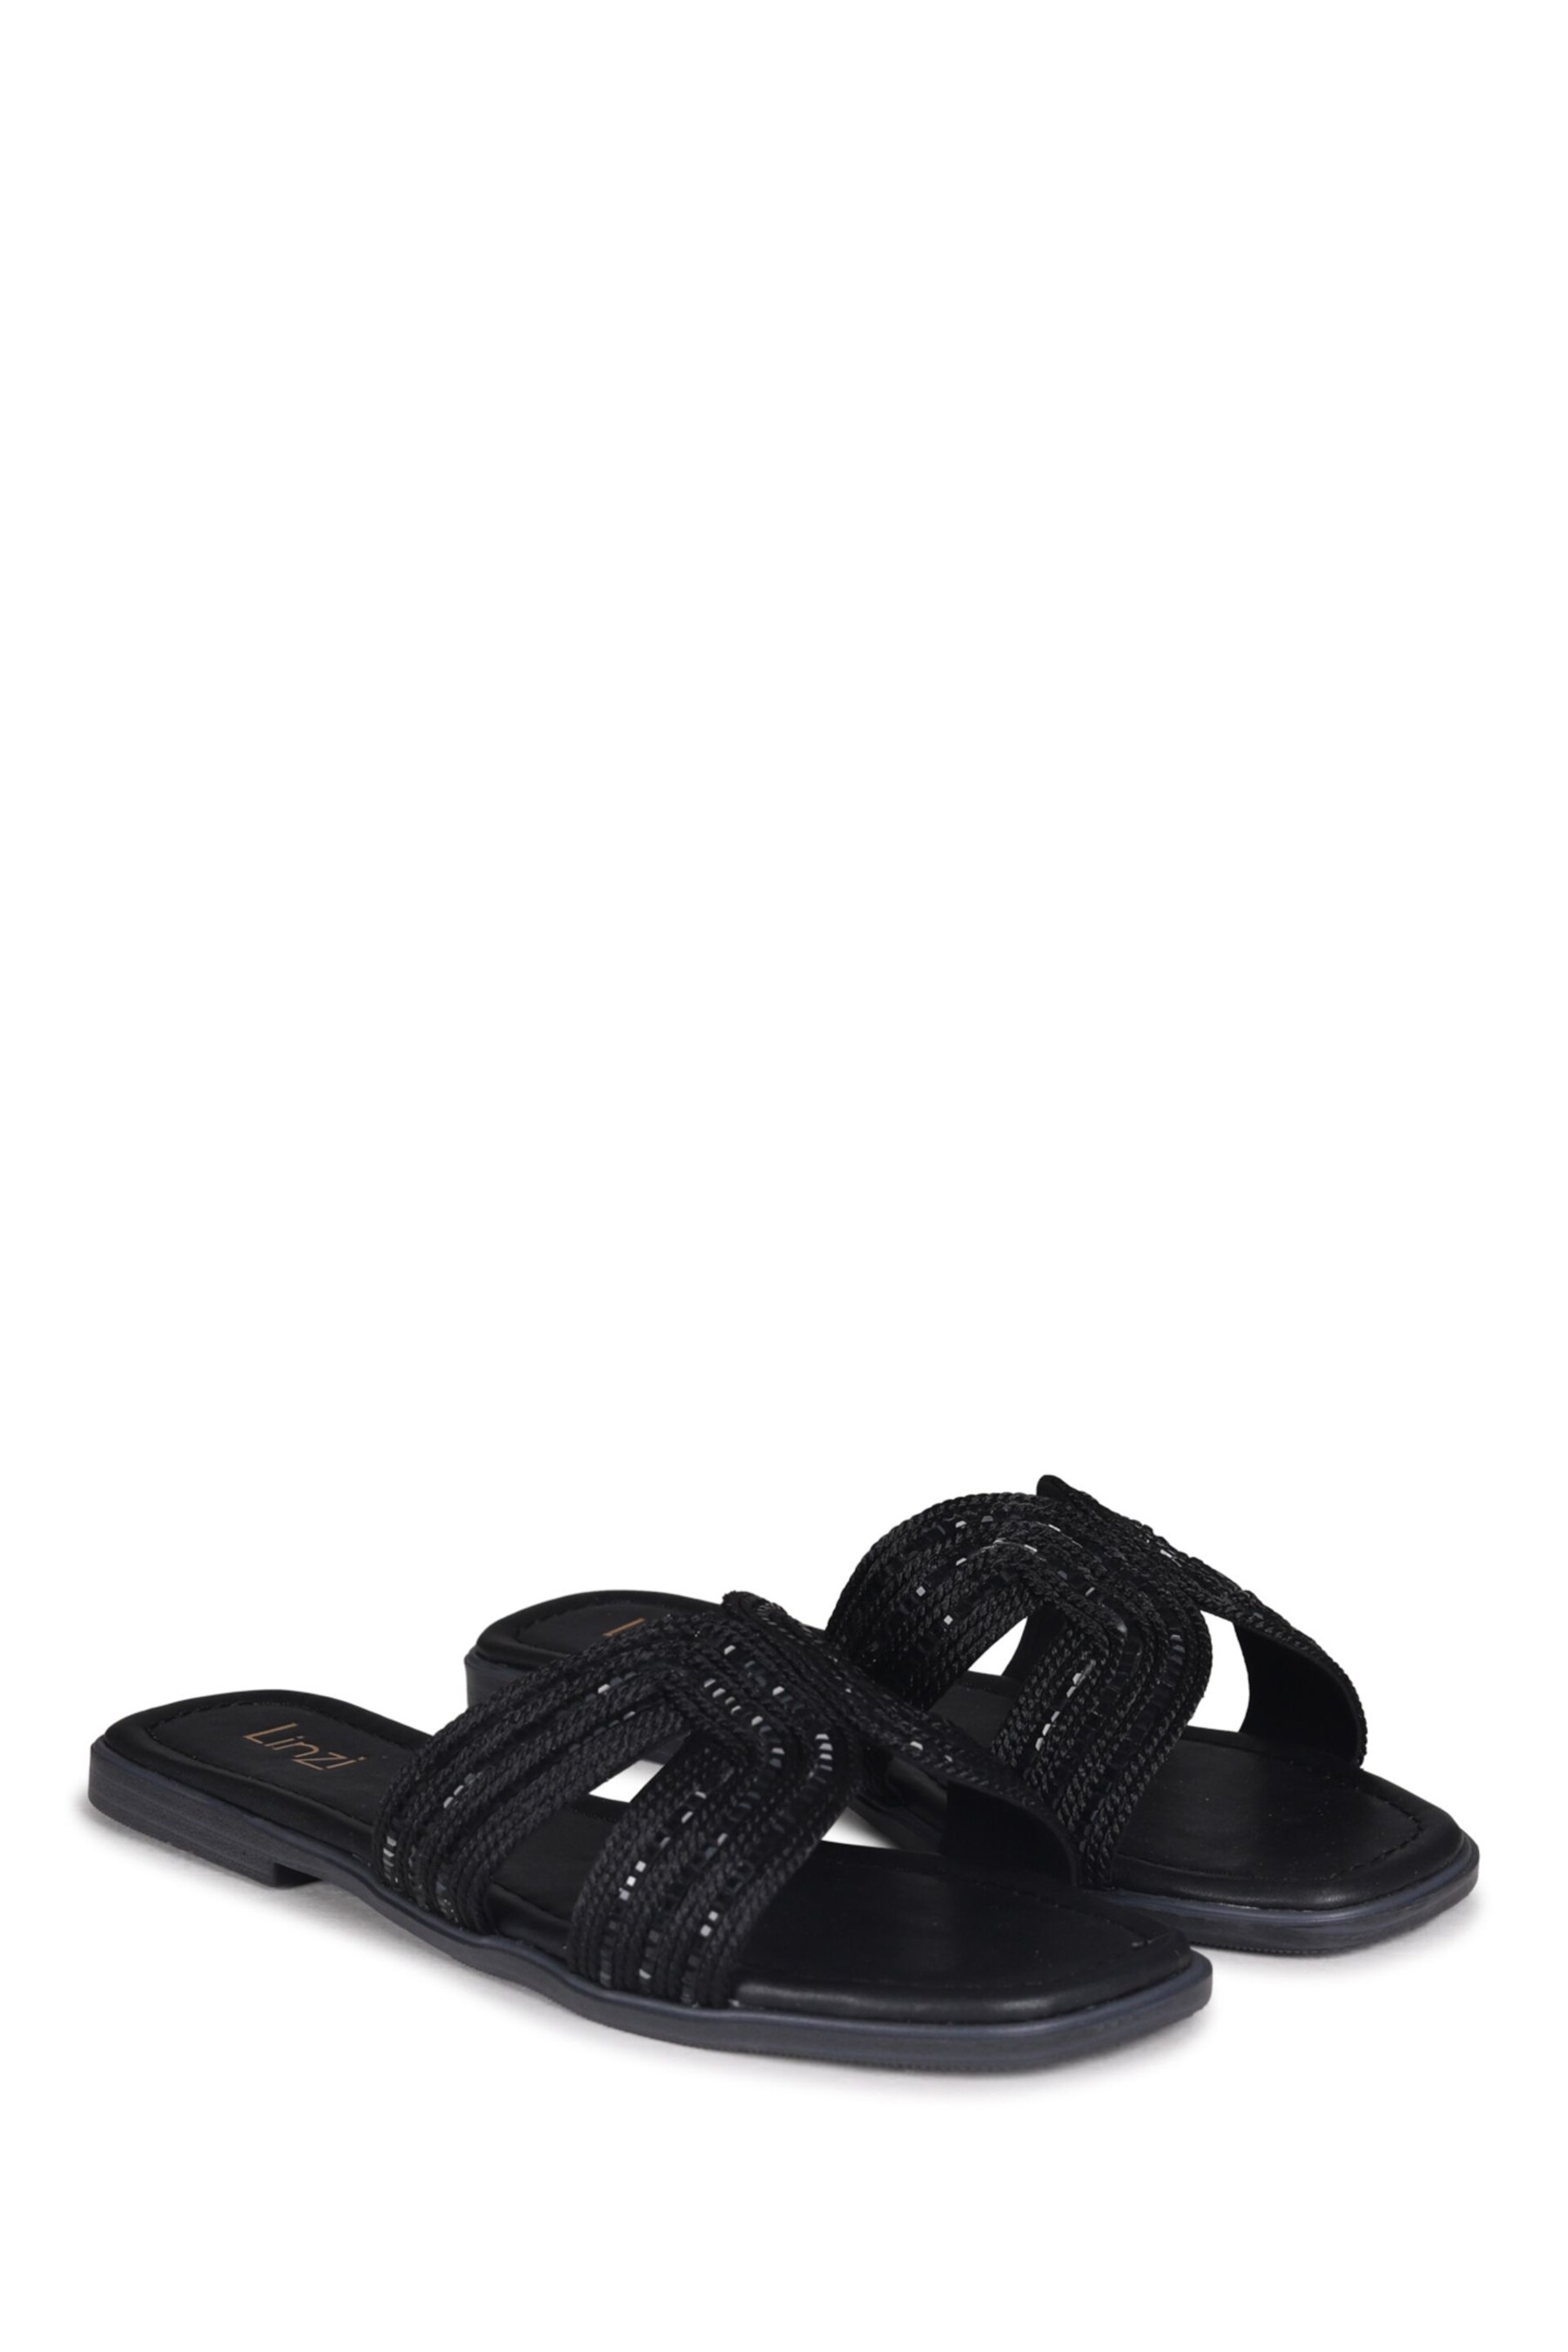 Linzi Black Nevada Flat Sandals With Embellished Front Strap - Image 3 of 4